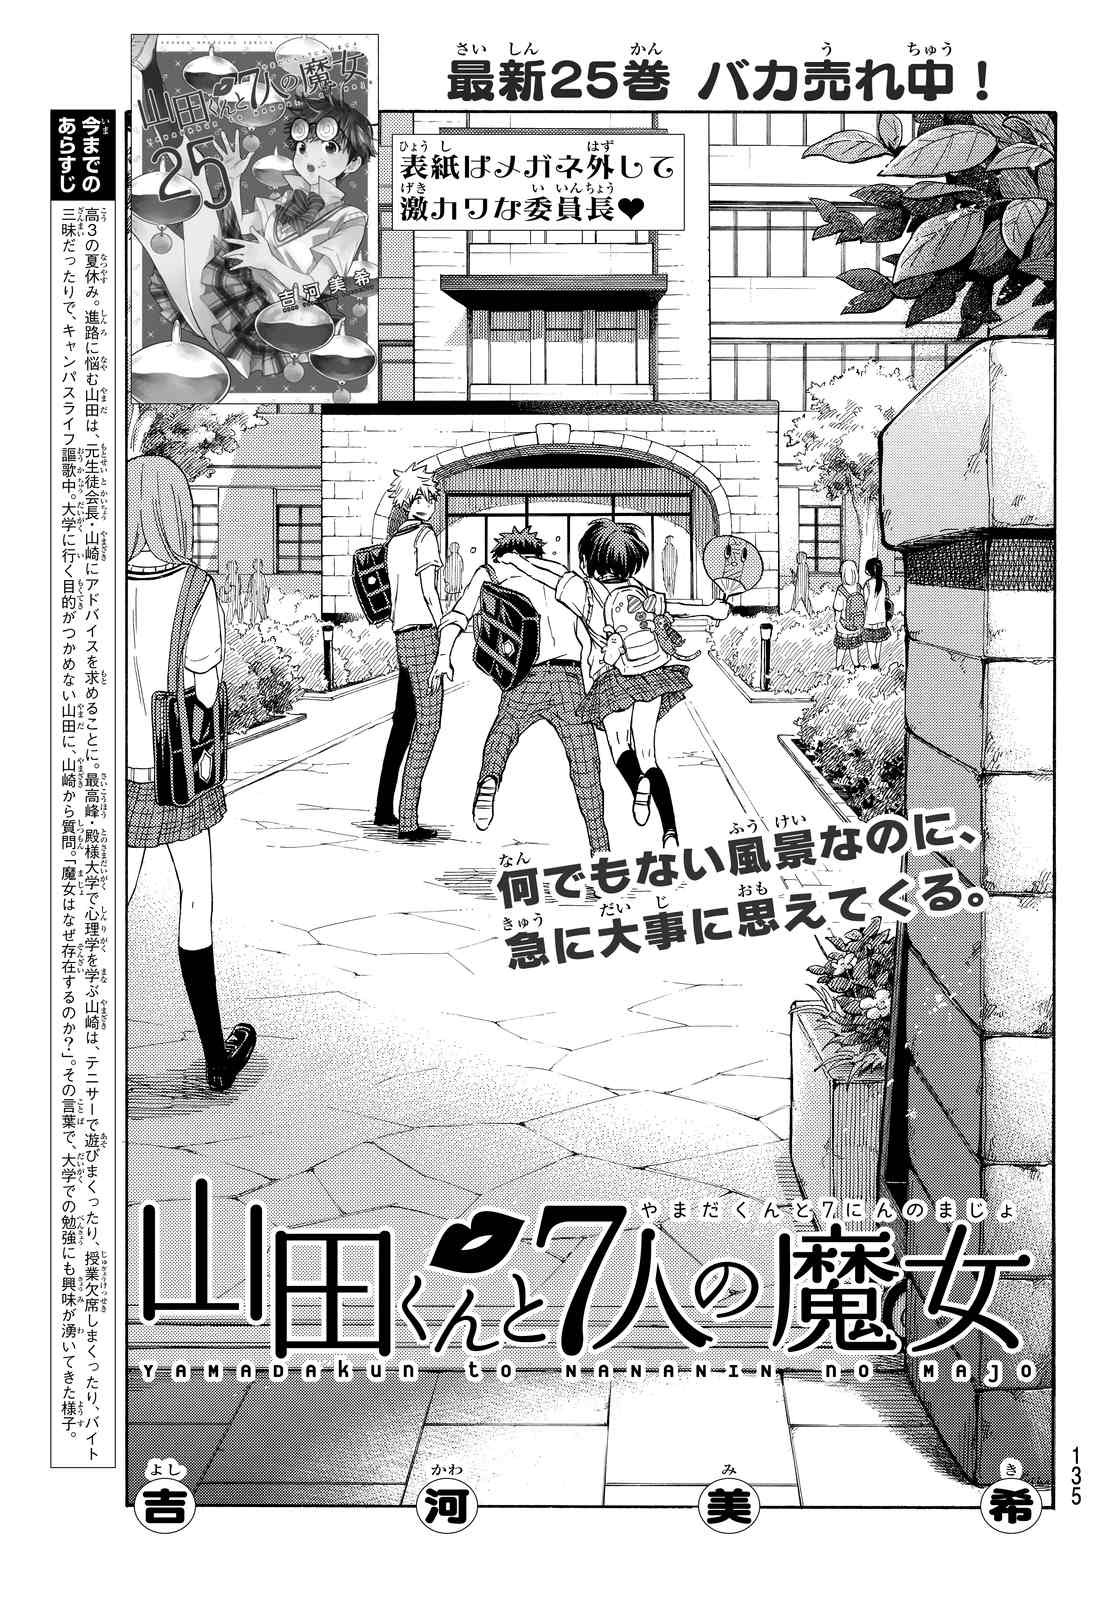 Yamada-kun to 7-nin no Majo - Chapter 230 - Page 1